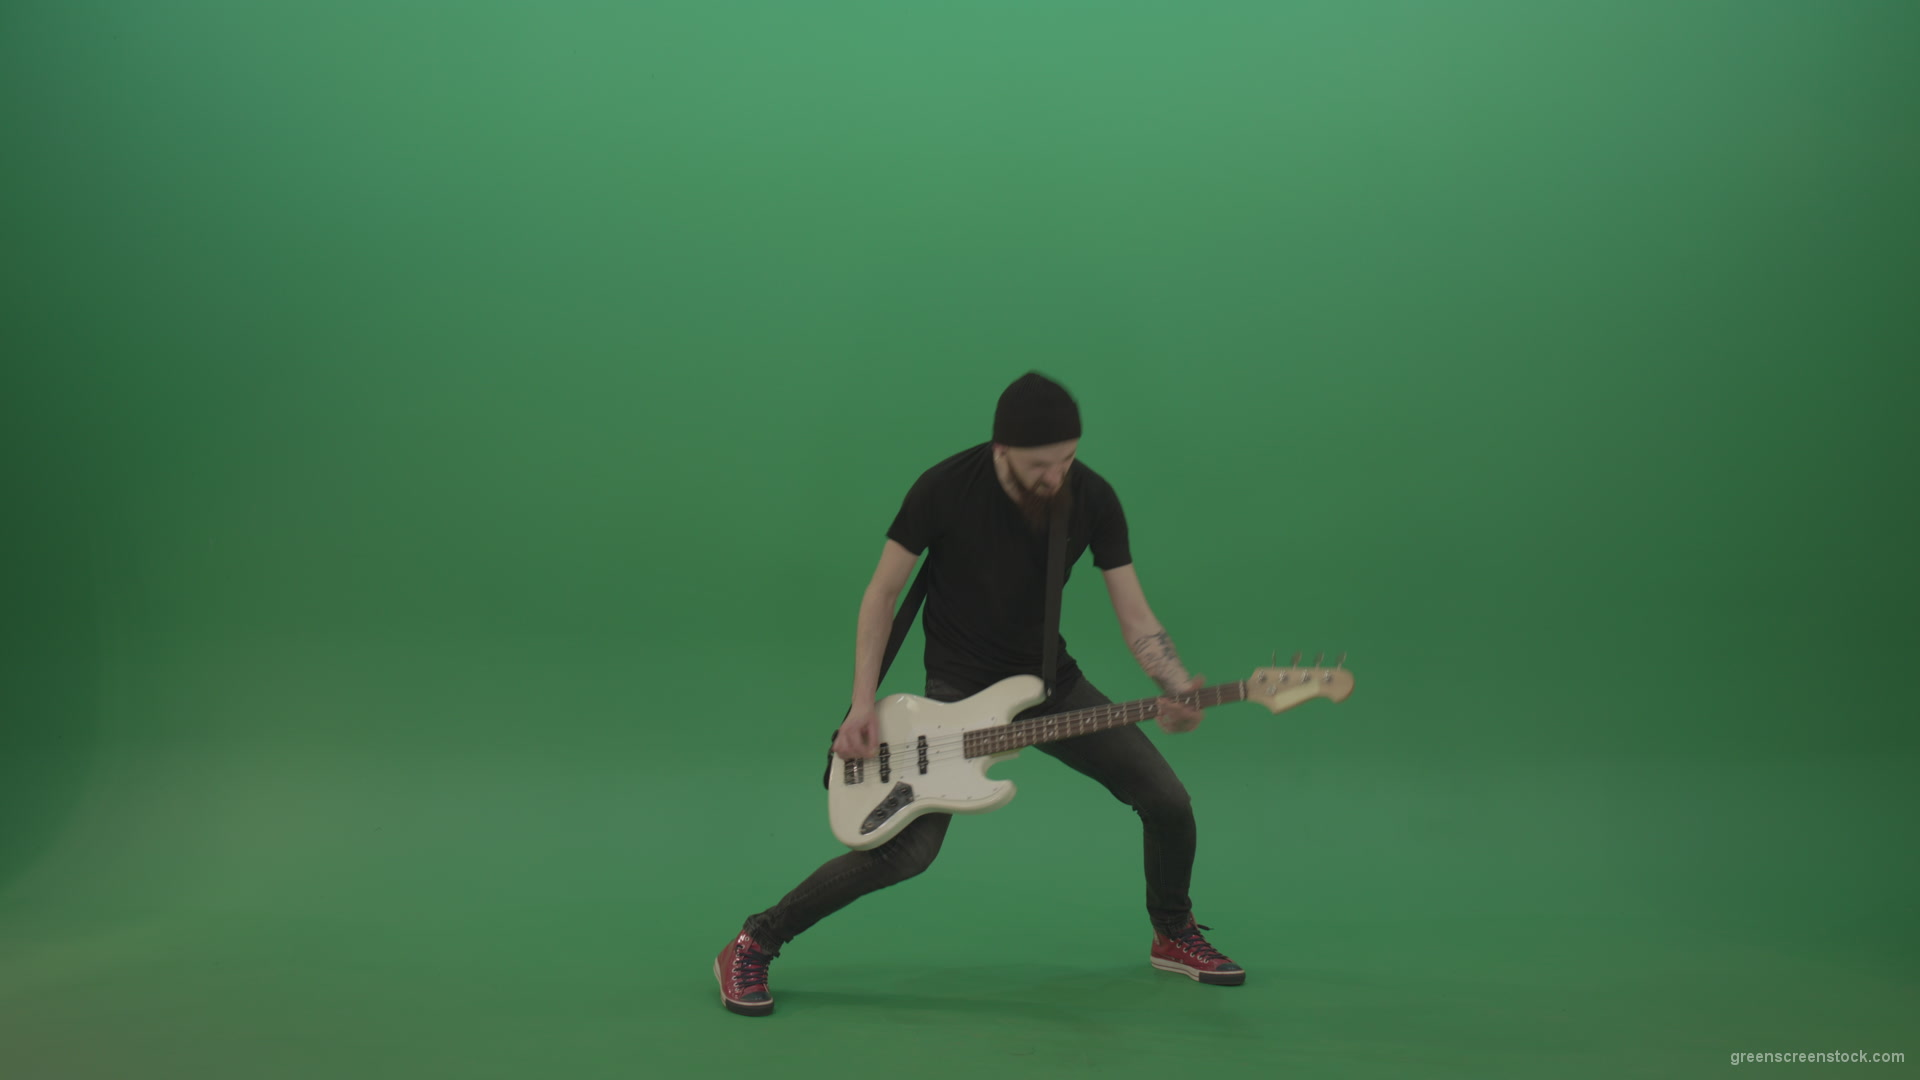 Man-enjoy-to-play-hard-rock-bass-guitar-isolated-on-green-screen-4k-footage_009 Green Screen Stock